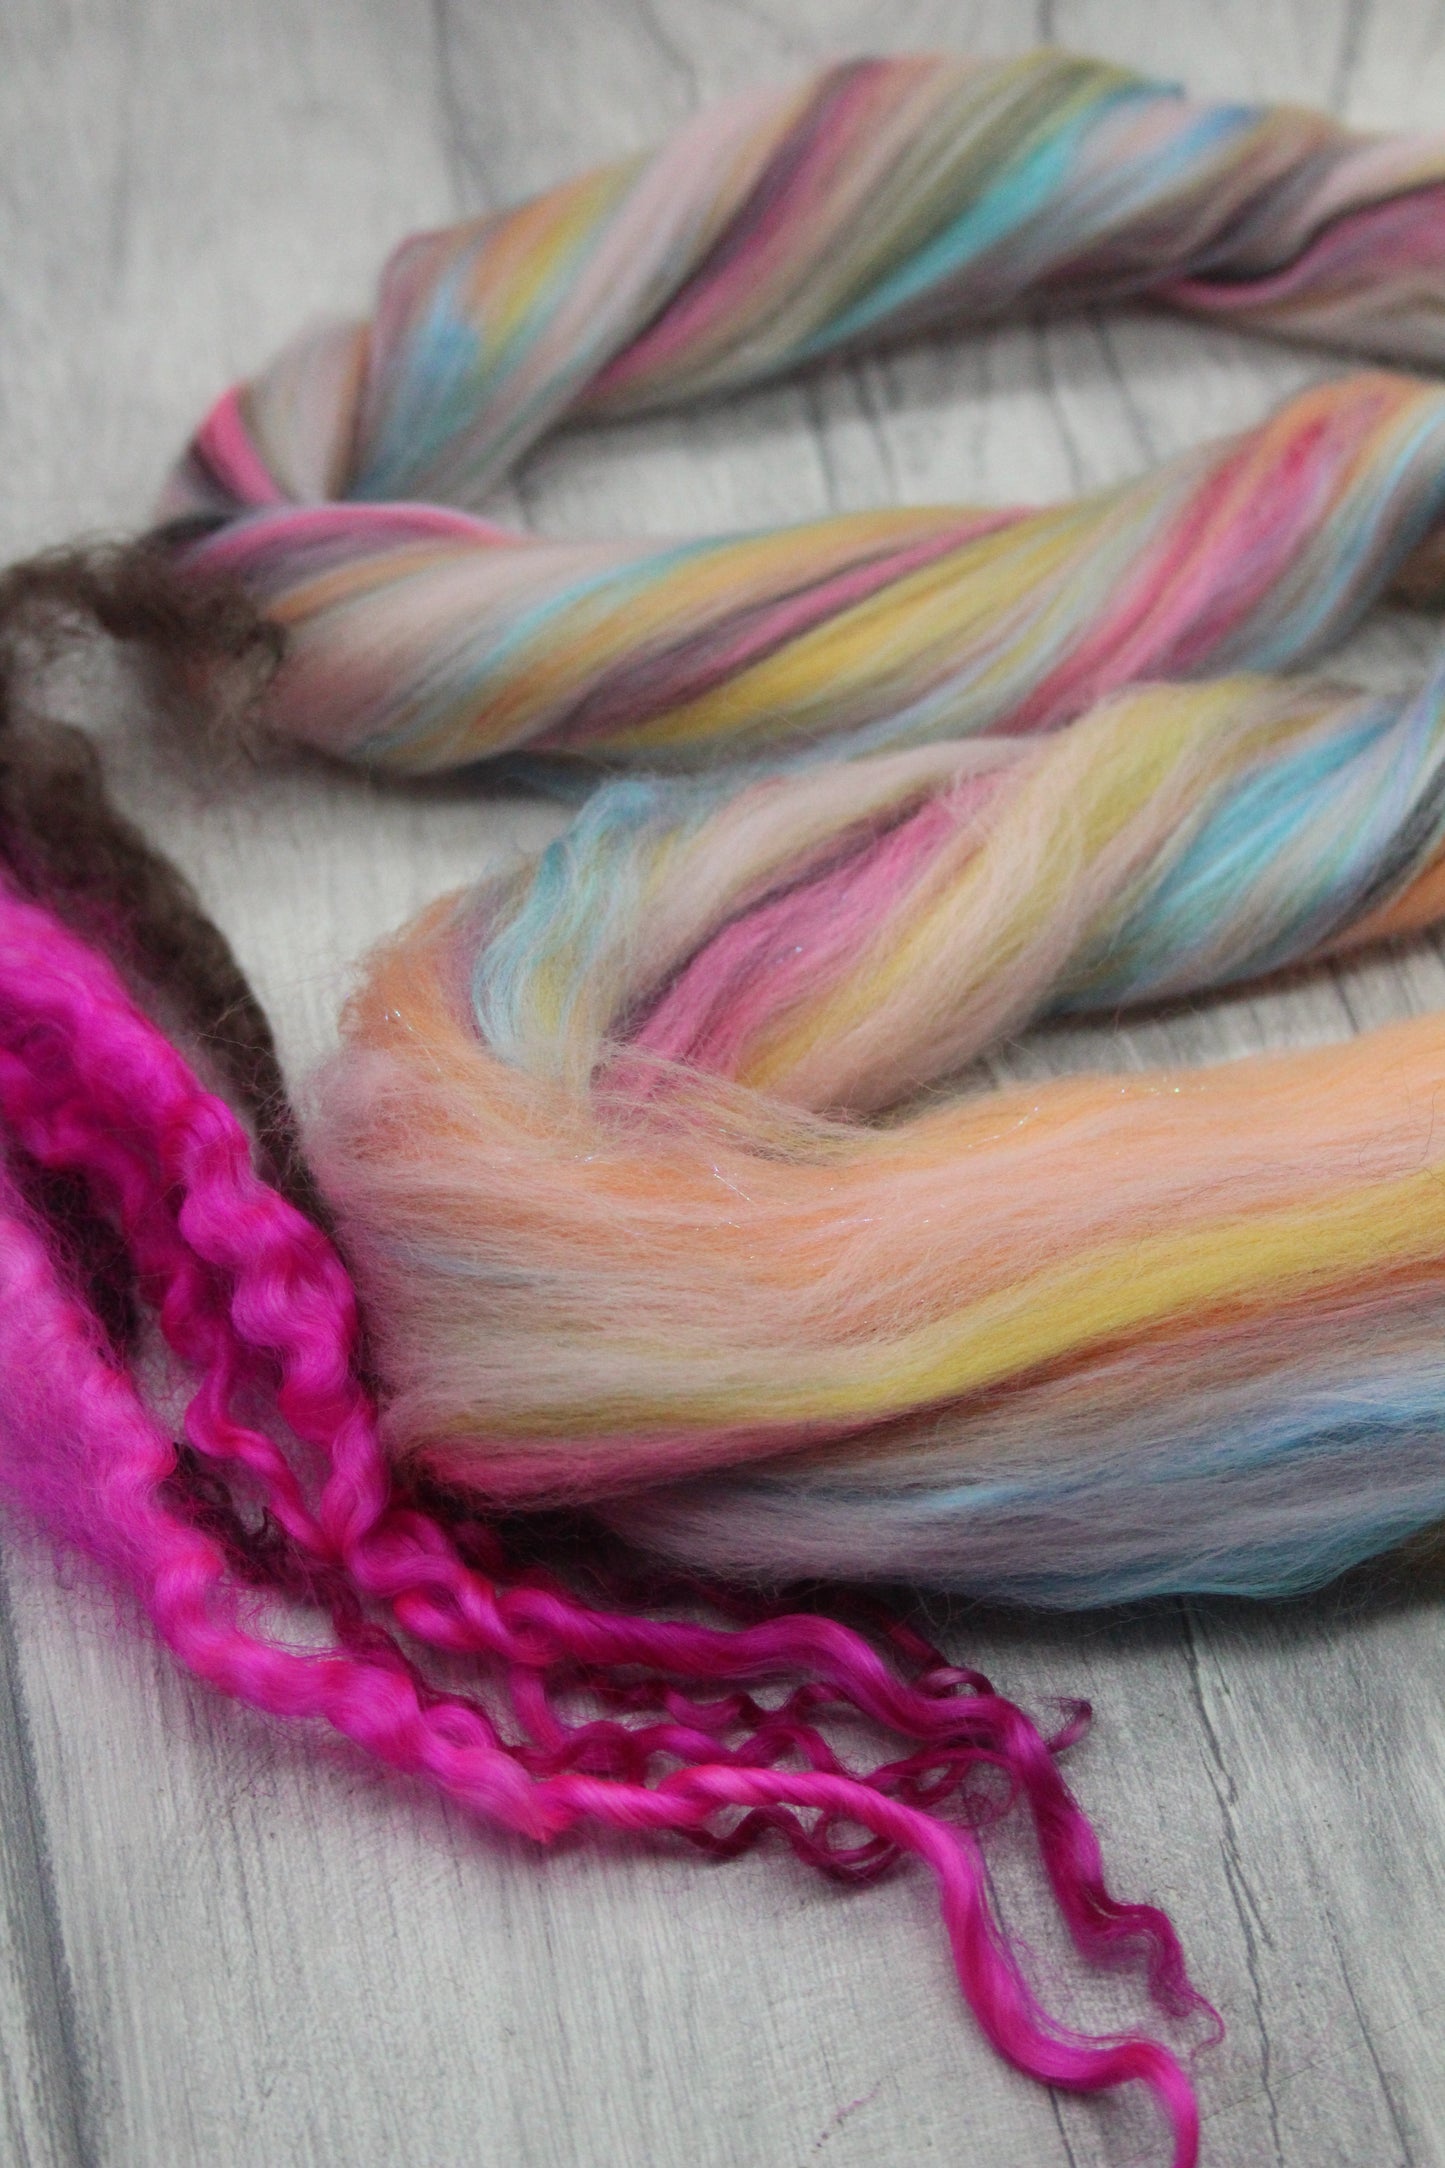 Wool Blend - Pink Black Yellow  - 18 grams / 0.6 oz  - Fibre for felting, weaving or spinning